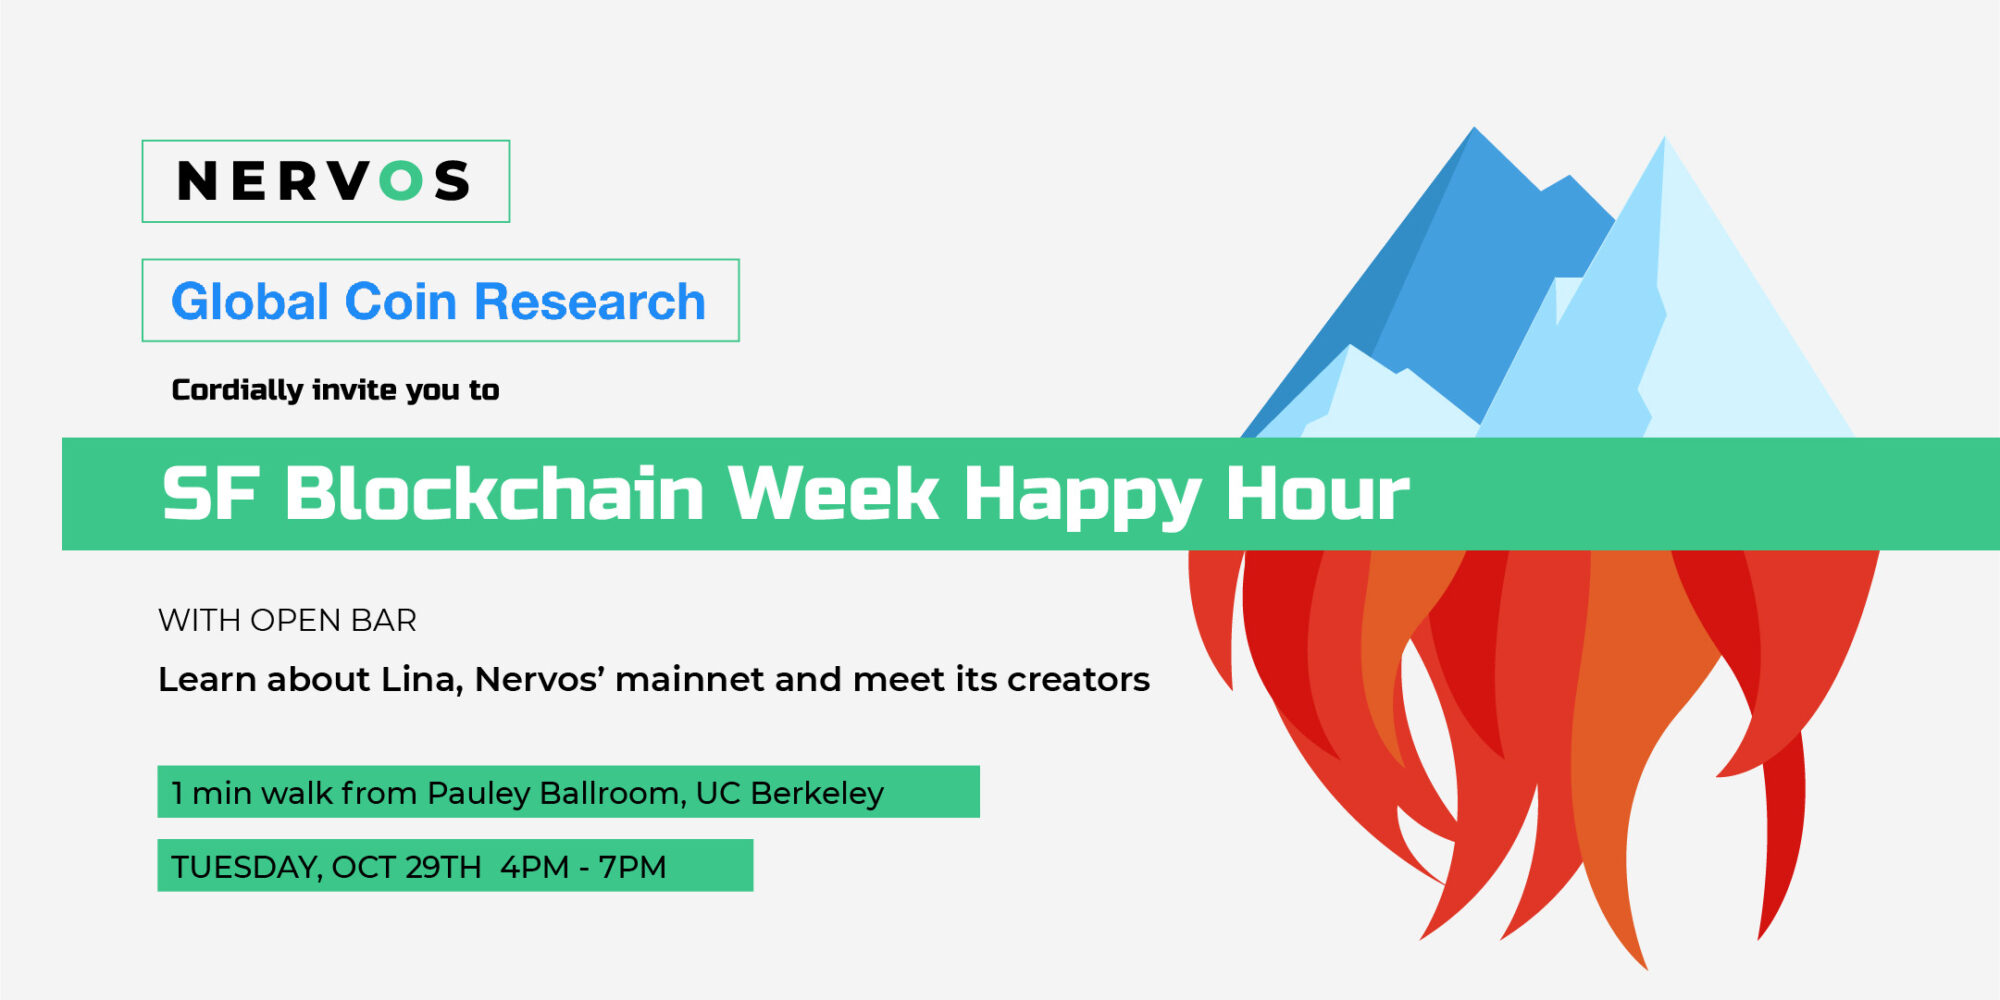 Going to San Francisco Blockchain Week?